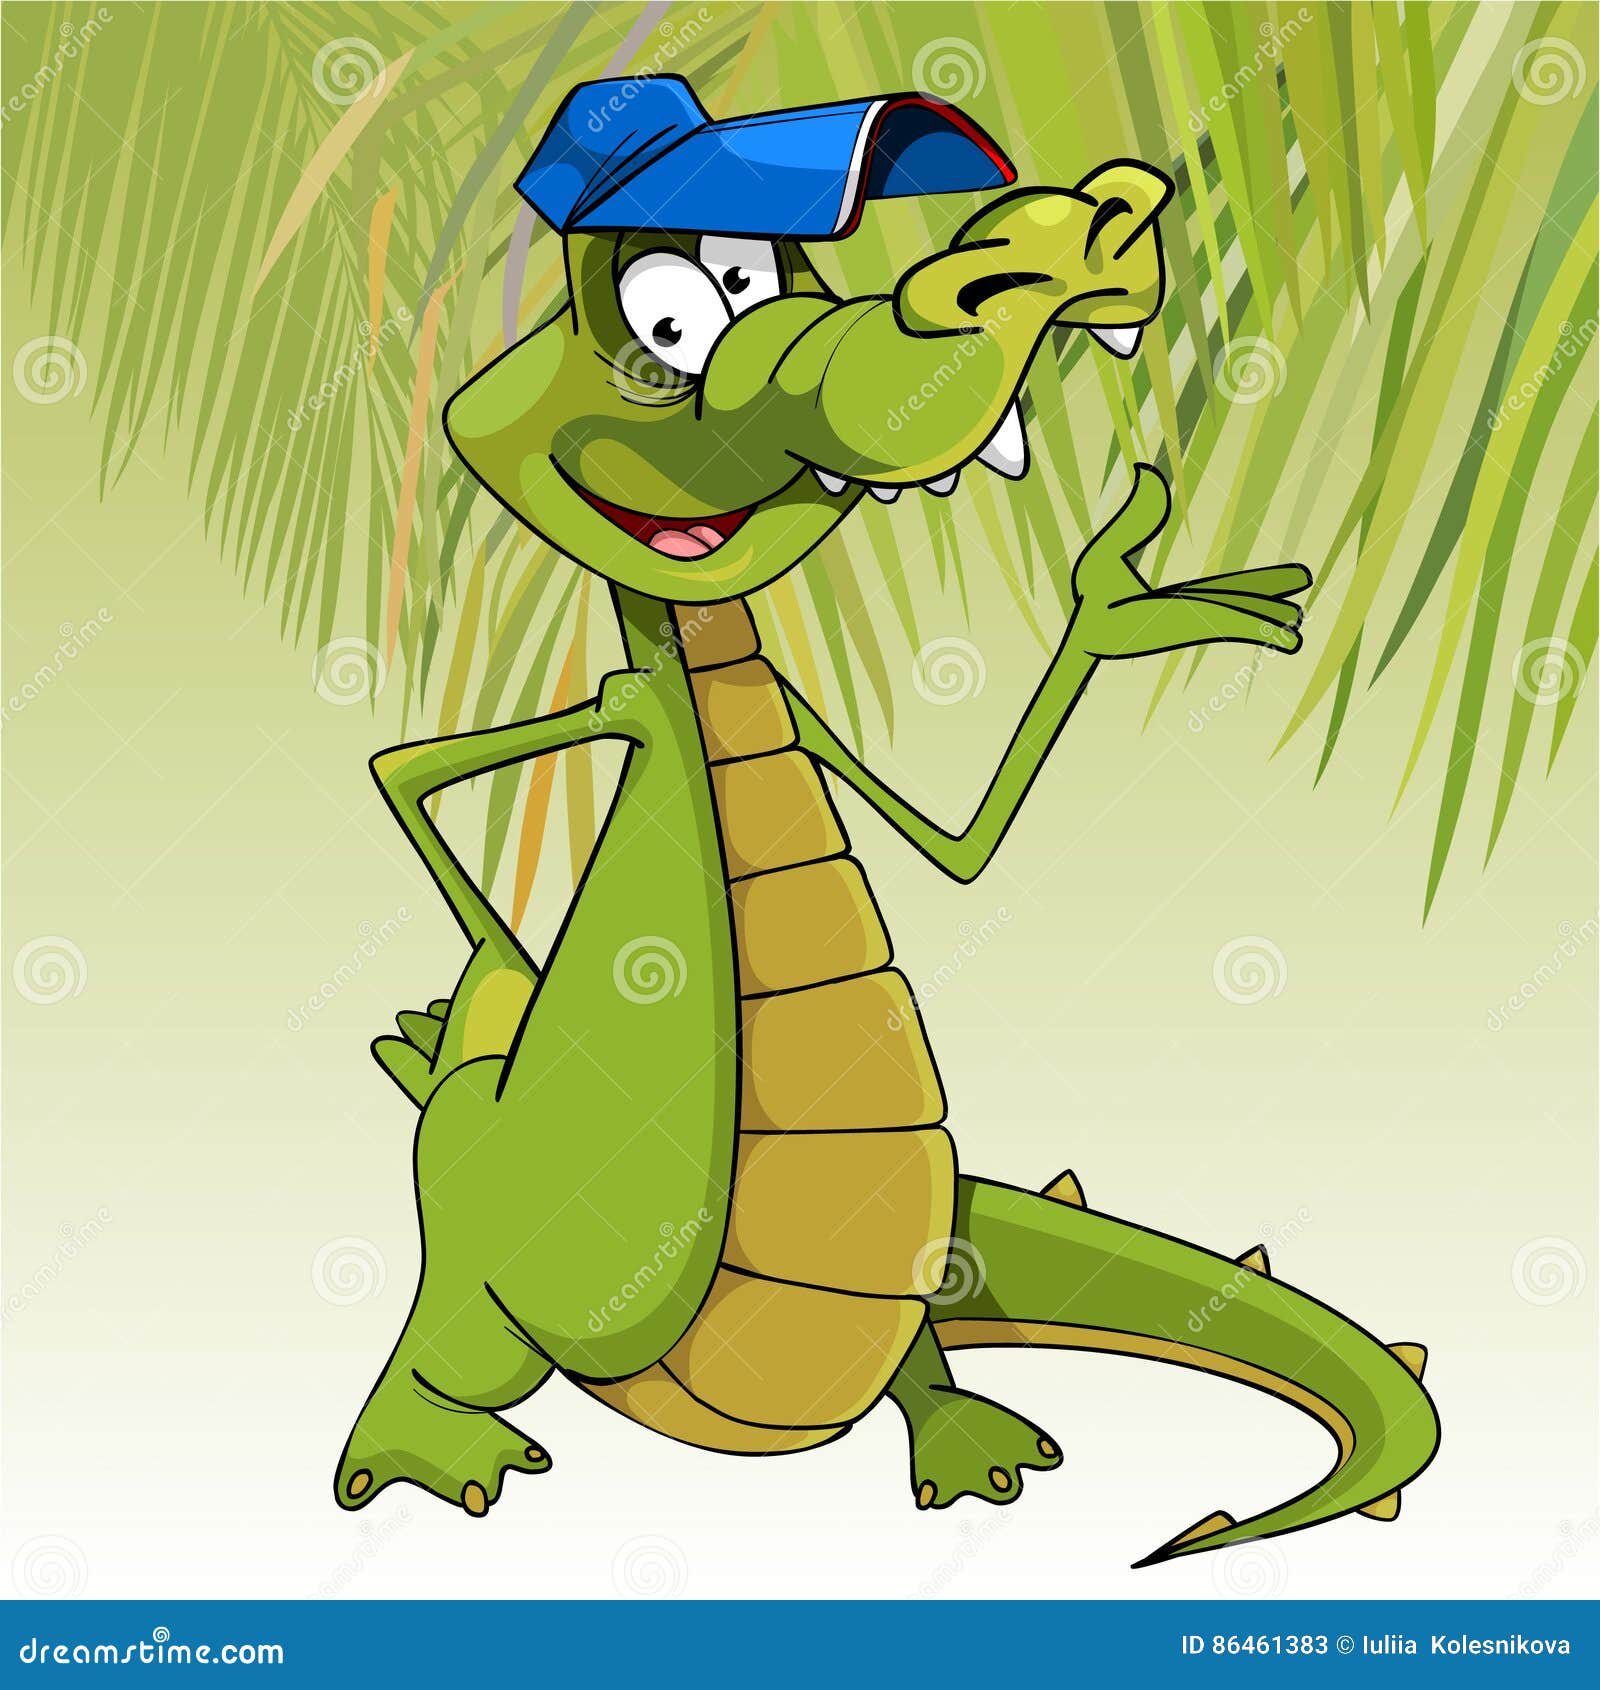 cartoon character cheerful crocodile in a cap gesticulating arm